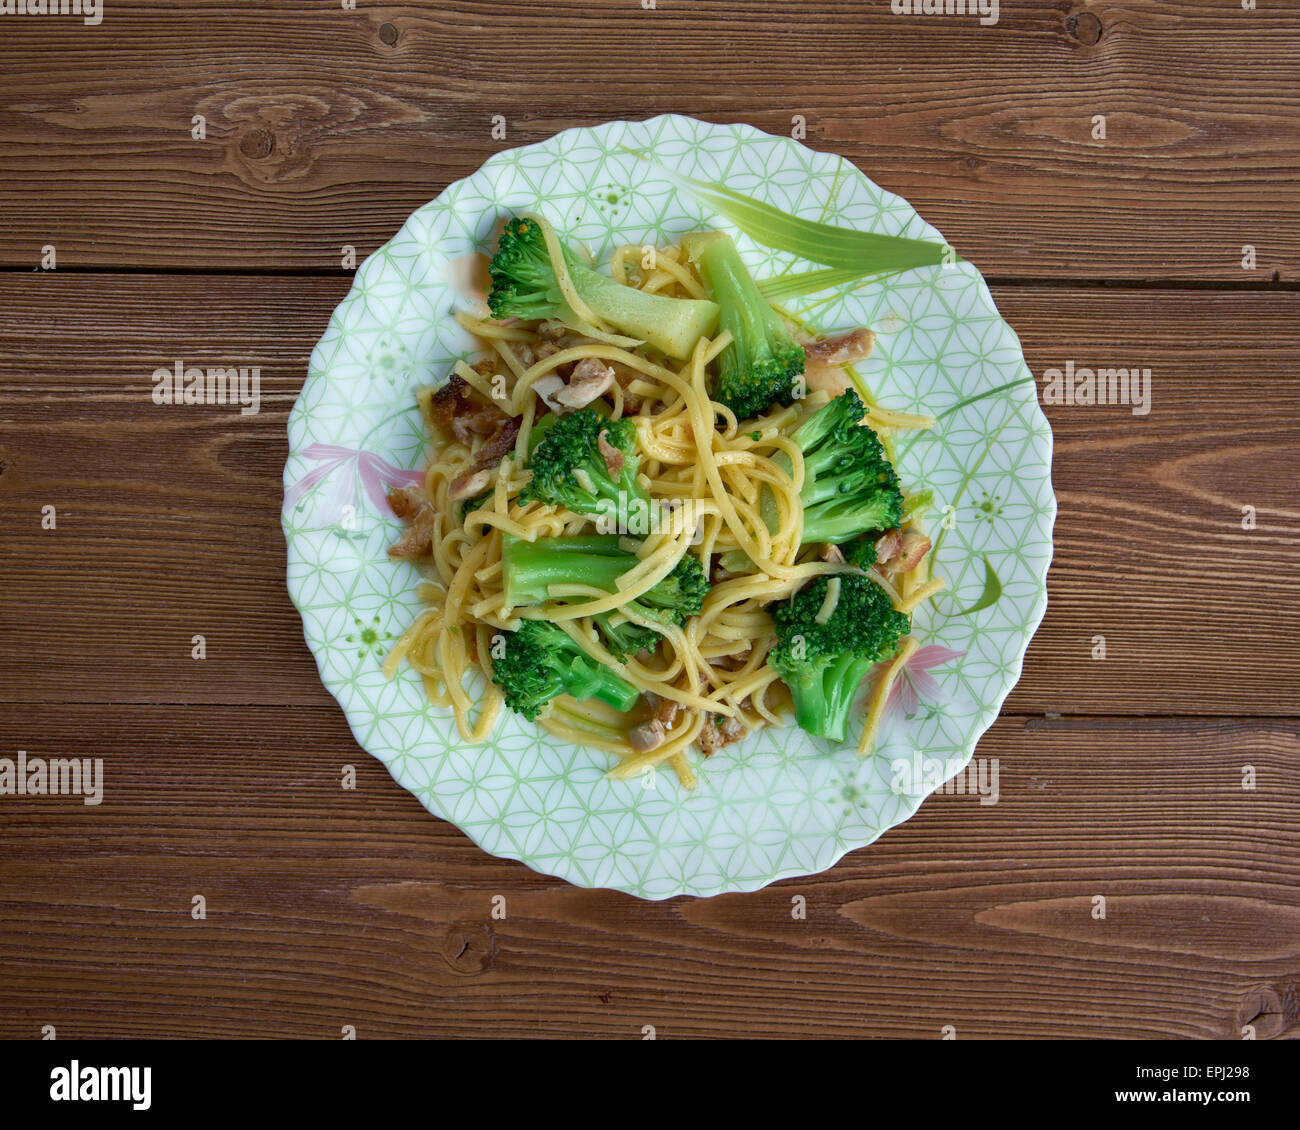 Crunchy Broccoli Salad Stock Photo